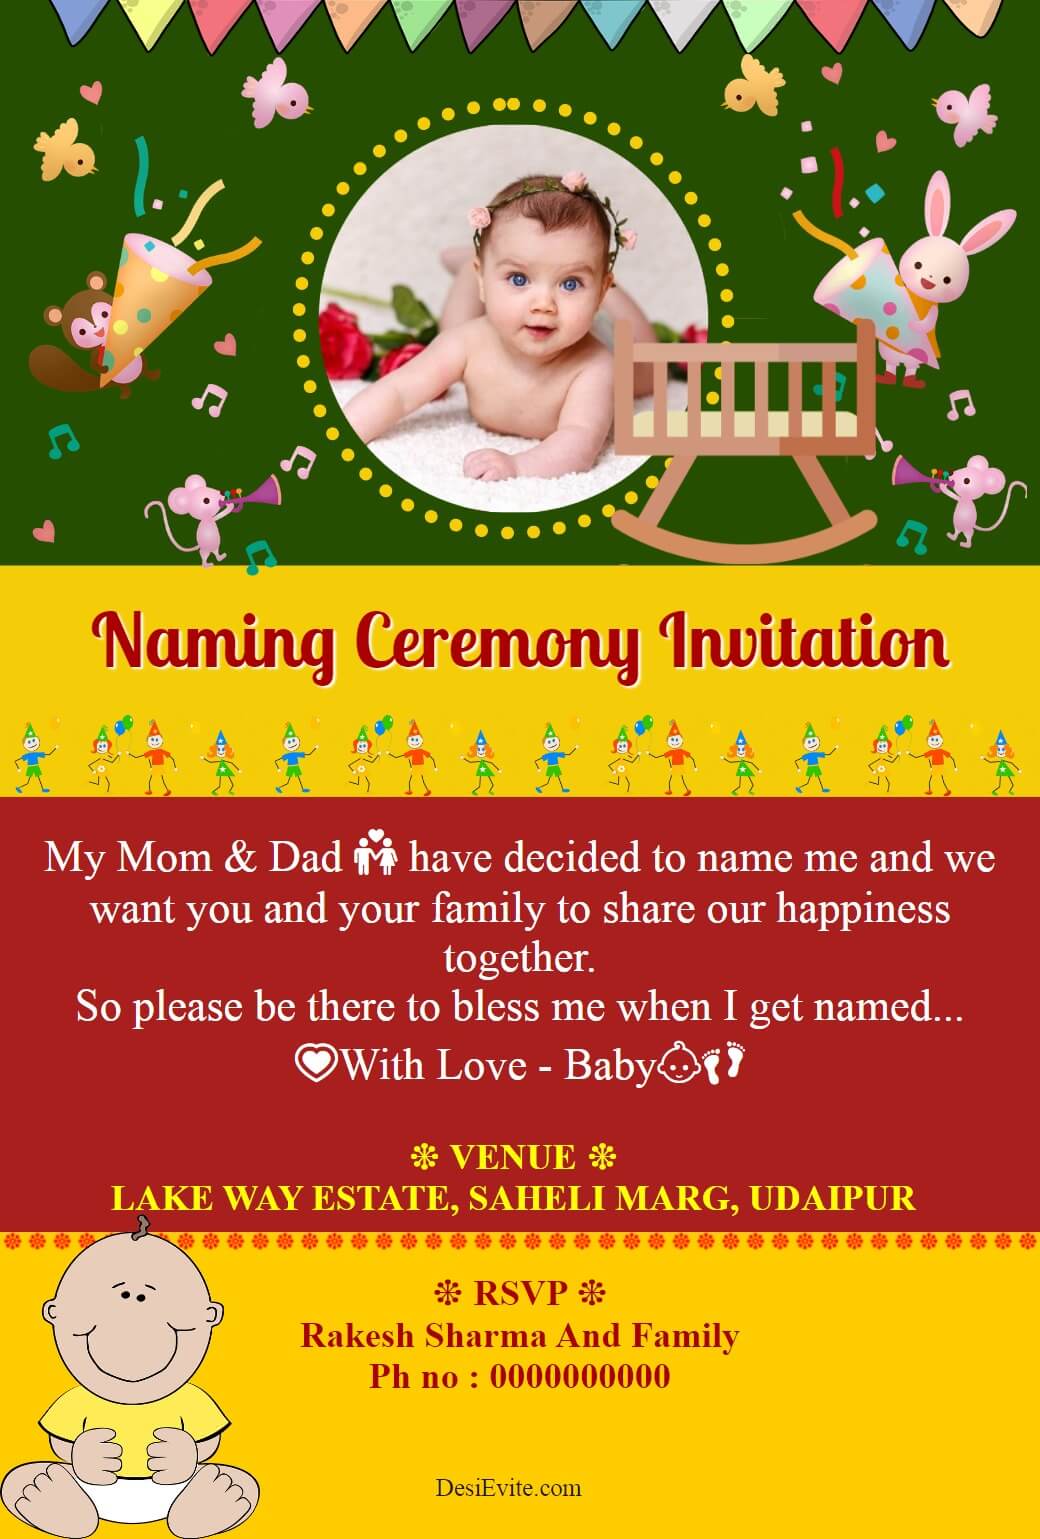 baby naming ceremony card 3 photo upload 151 